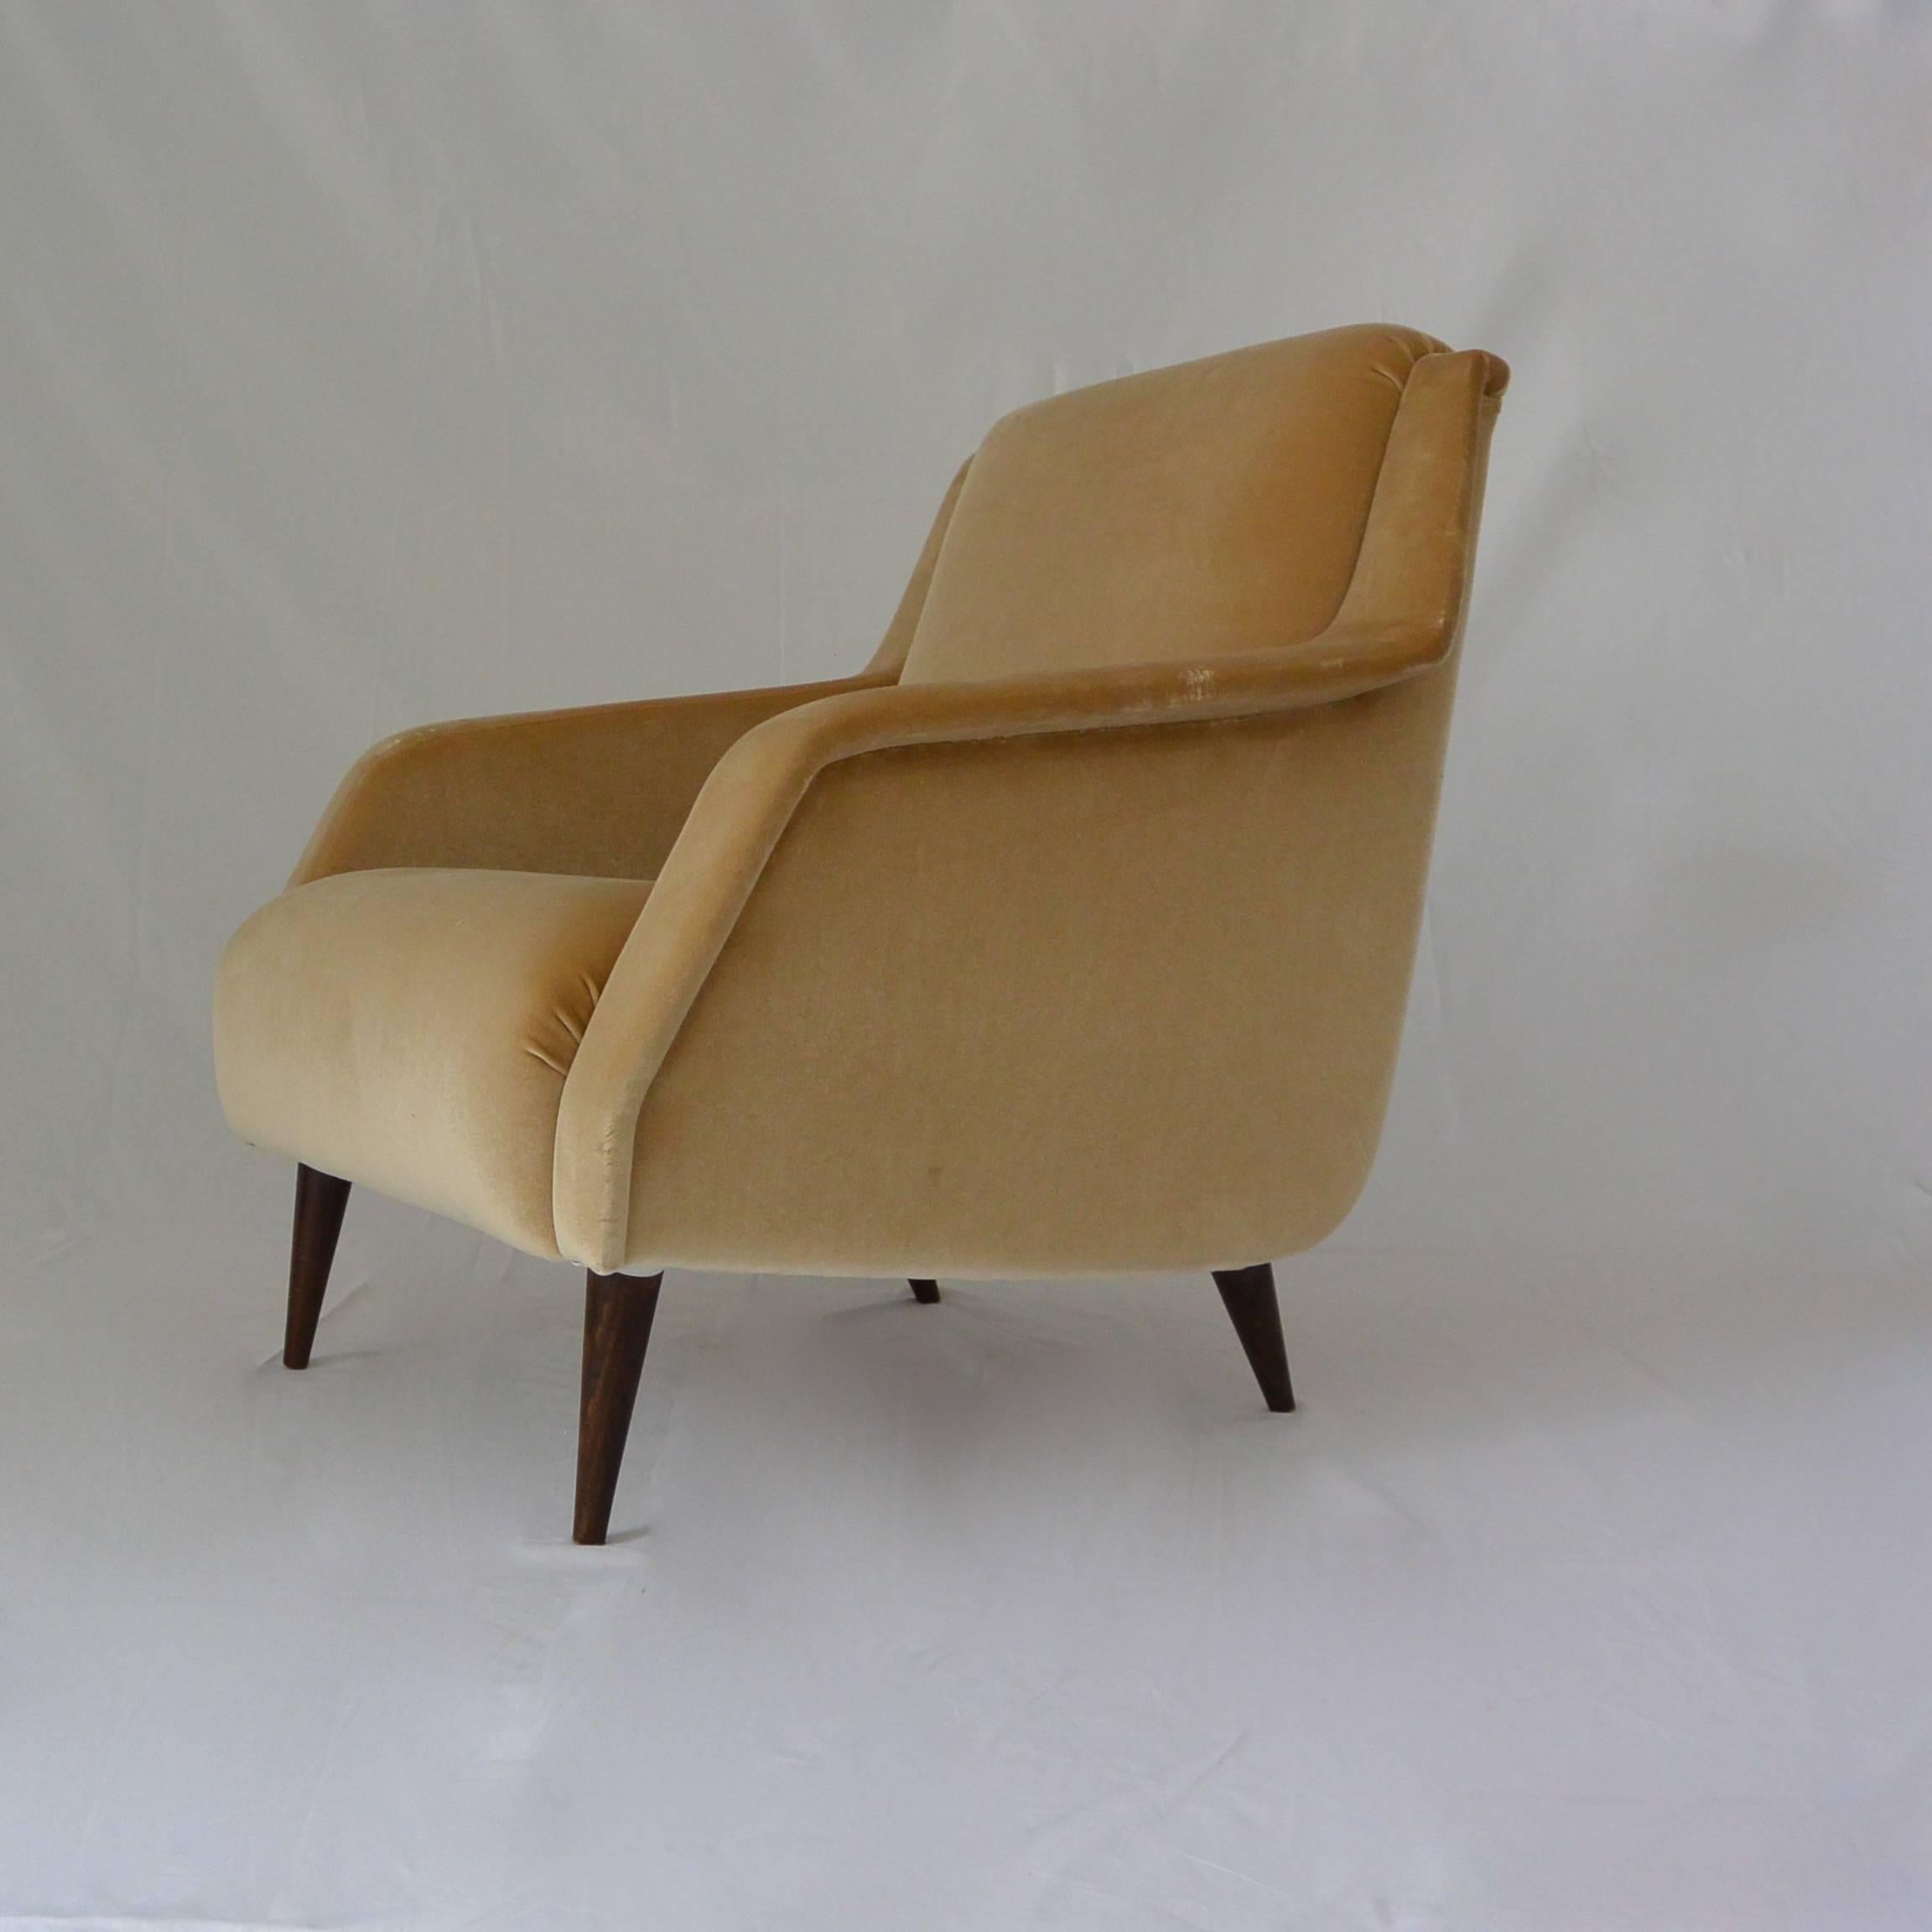 Beautiful pair of lounge chairs by Carlo de Carli model -802-;
Manufactured by Cassina,
circa 1955.

Renewed upholstery and cover in beige velvet.

Litterature:
Domus 320 (luglio 1956), pubblicità Vipla; Pier Carlo Santini, 
Gli anni del